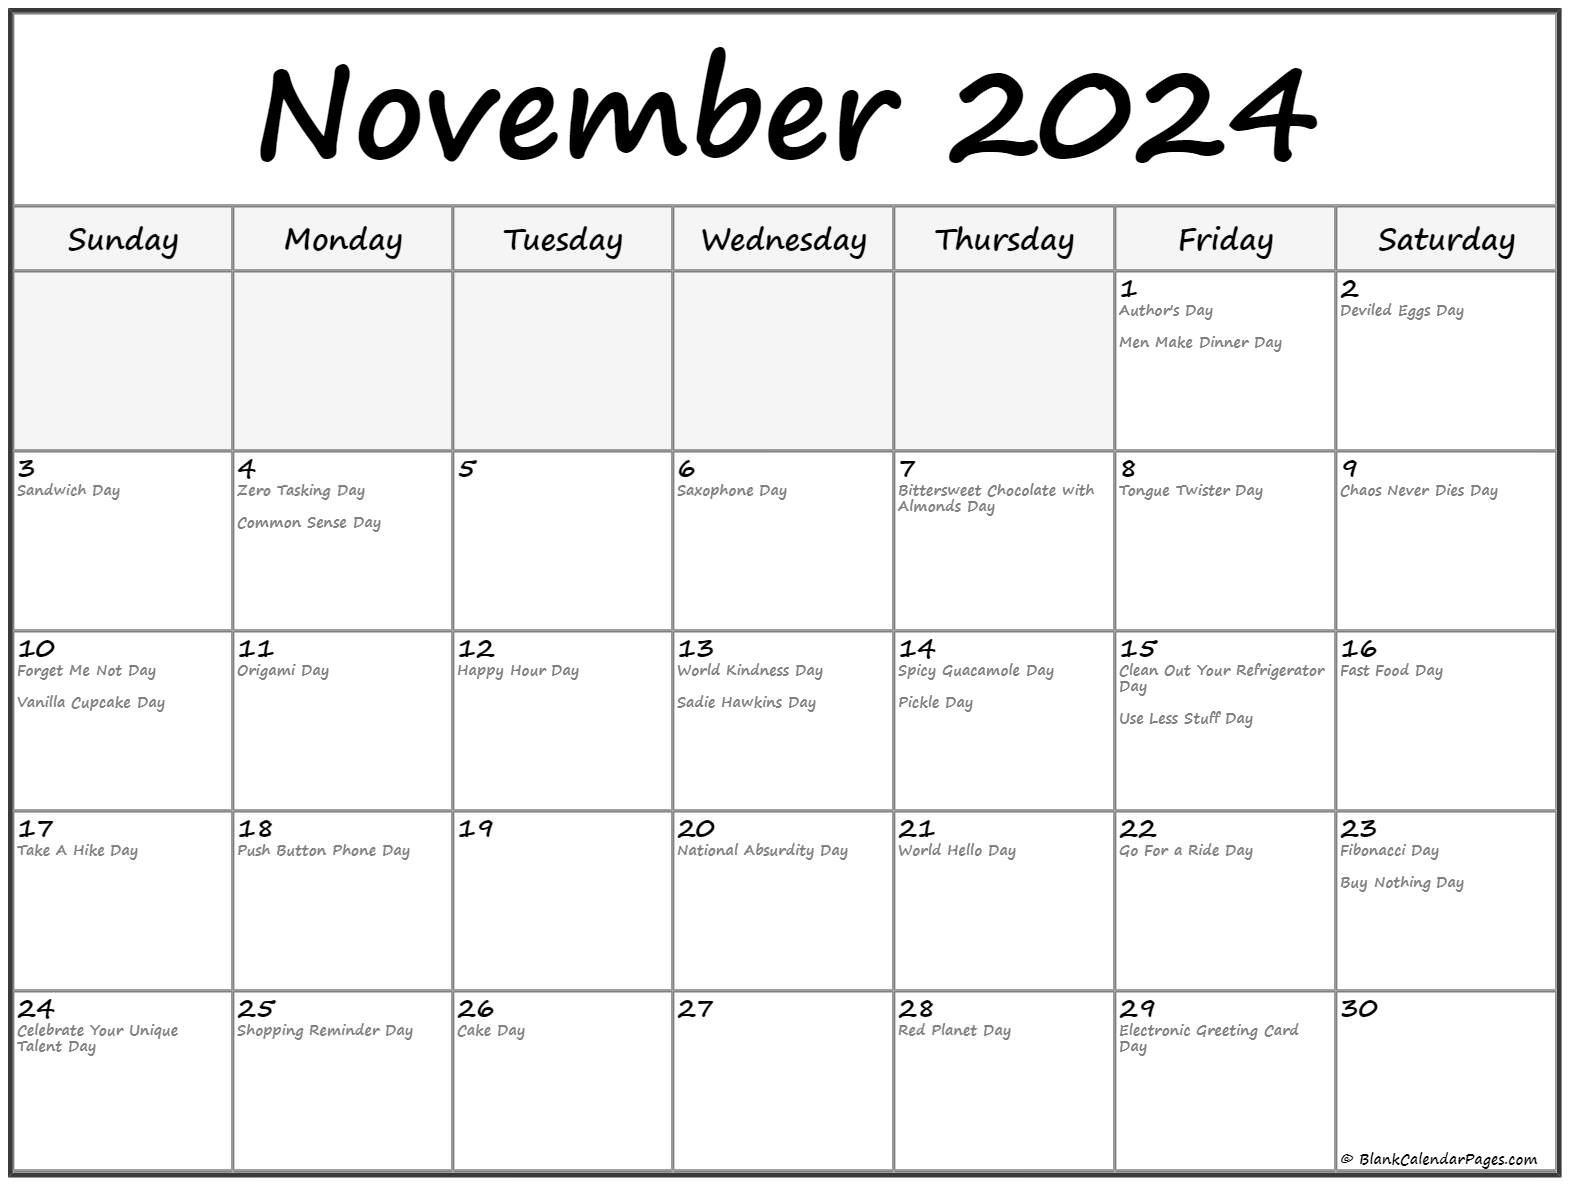 November 2021 Calendar Printable With Holidays Calendar 2021 Images